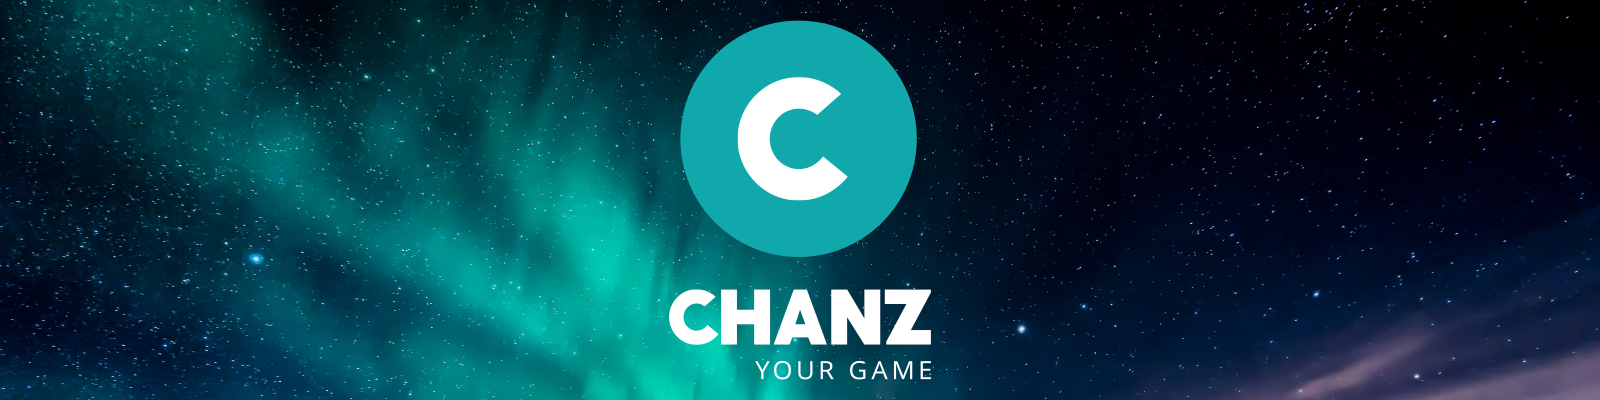 chanz-casino-banner